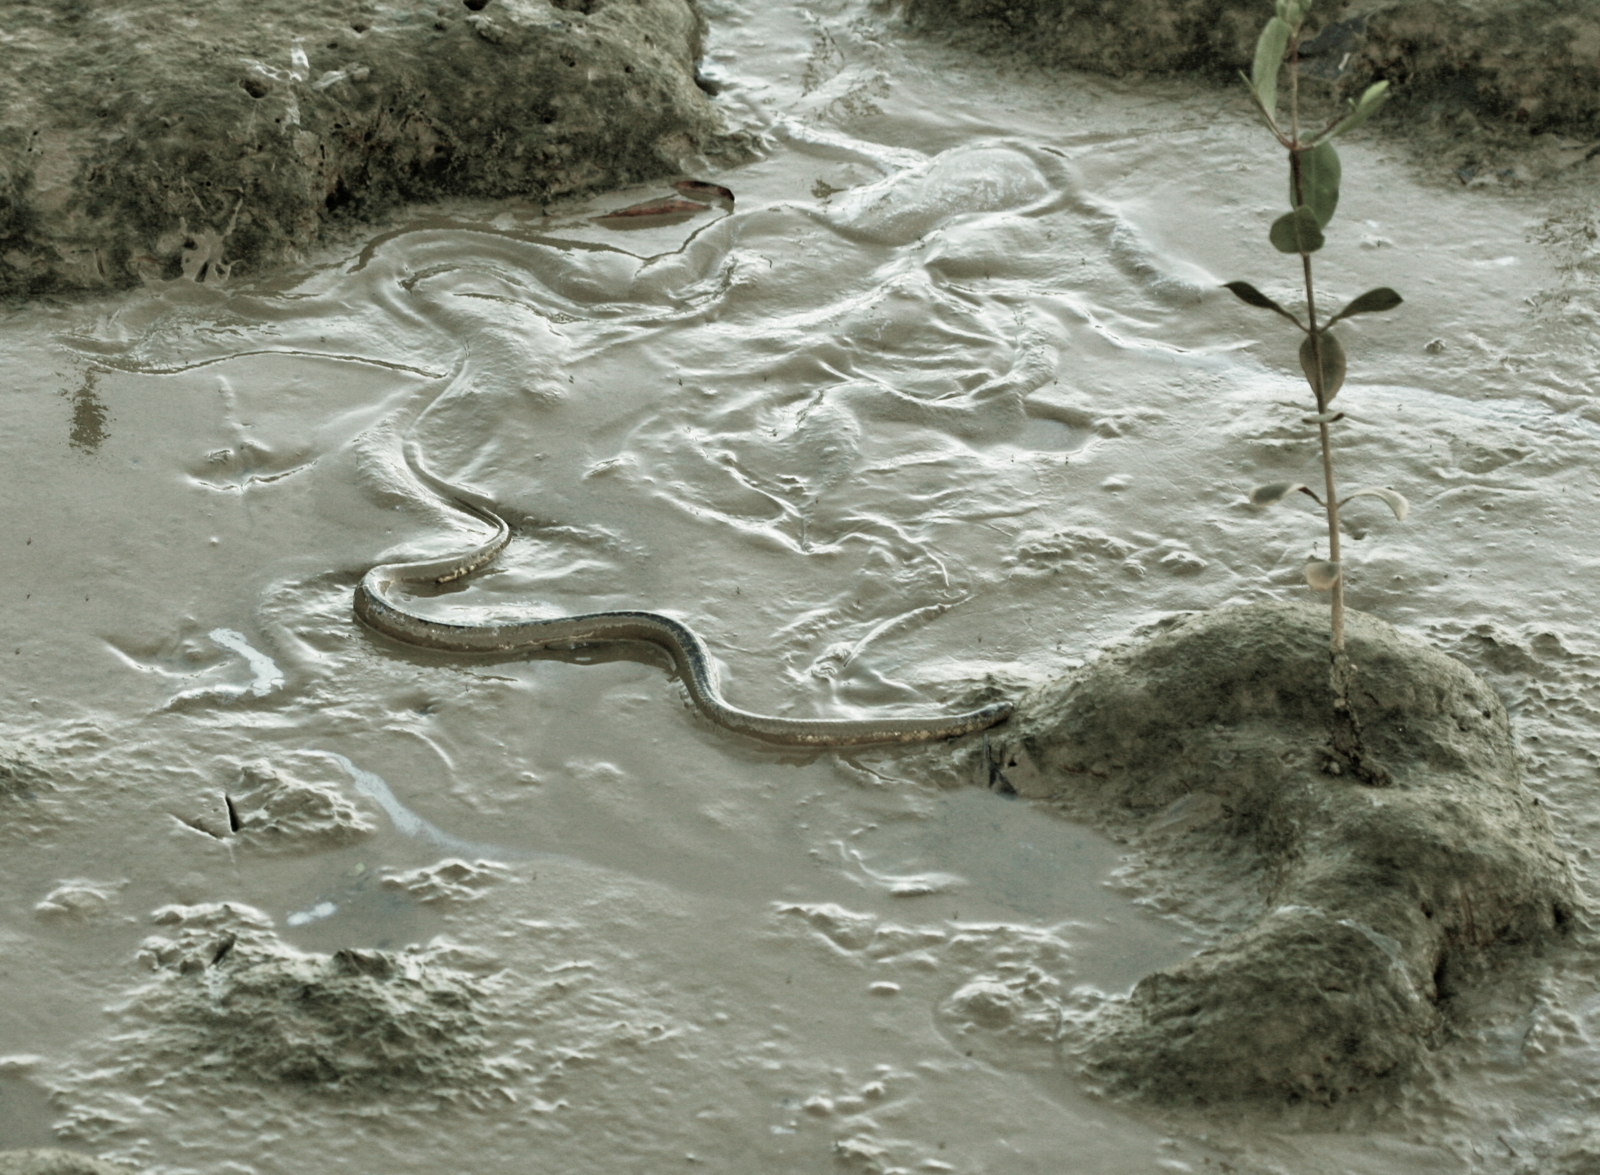 6 – Erythrolamprus cobella or mangrove snake (Dipsadidae)